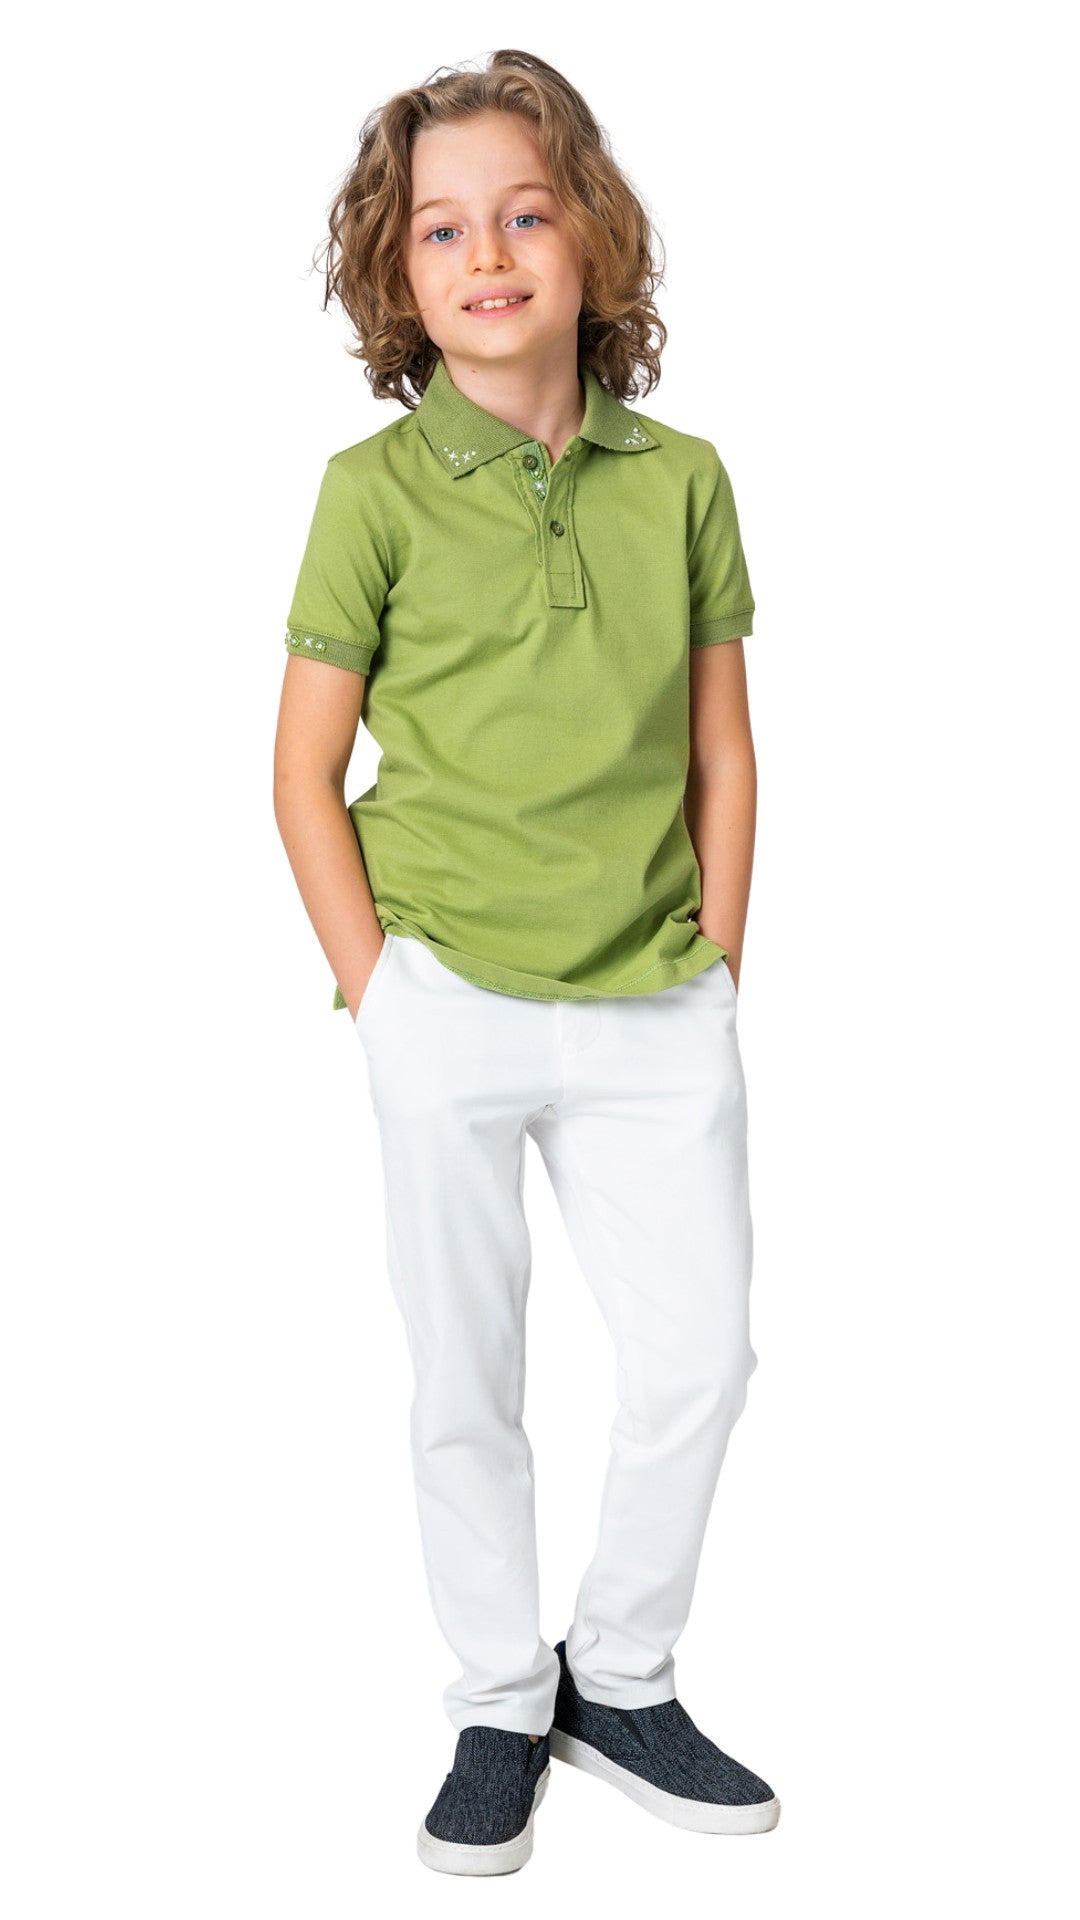 InCity Boys Toddler 1-6 Years Short Sleeve Clot Polo Shirt InCity Boys Girls